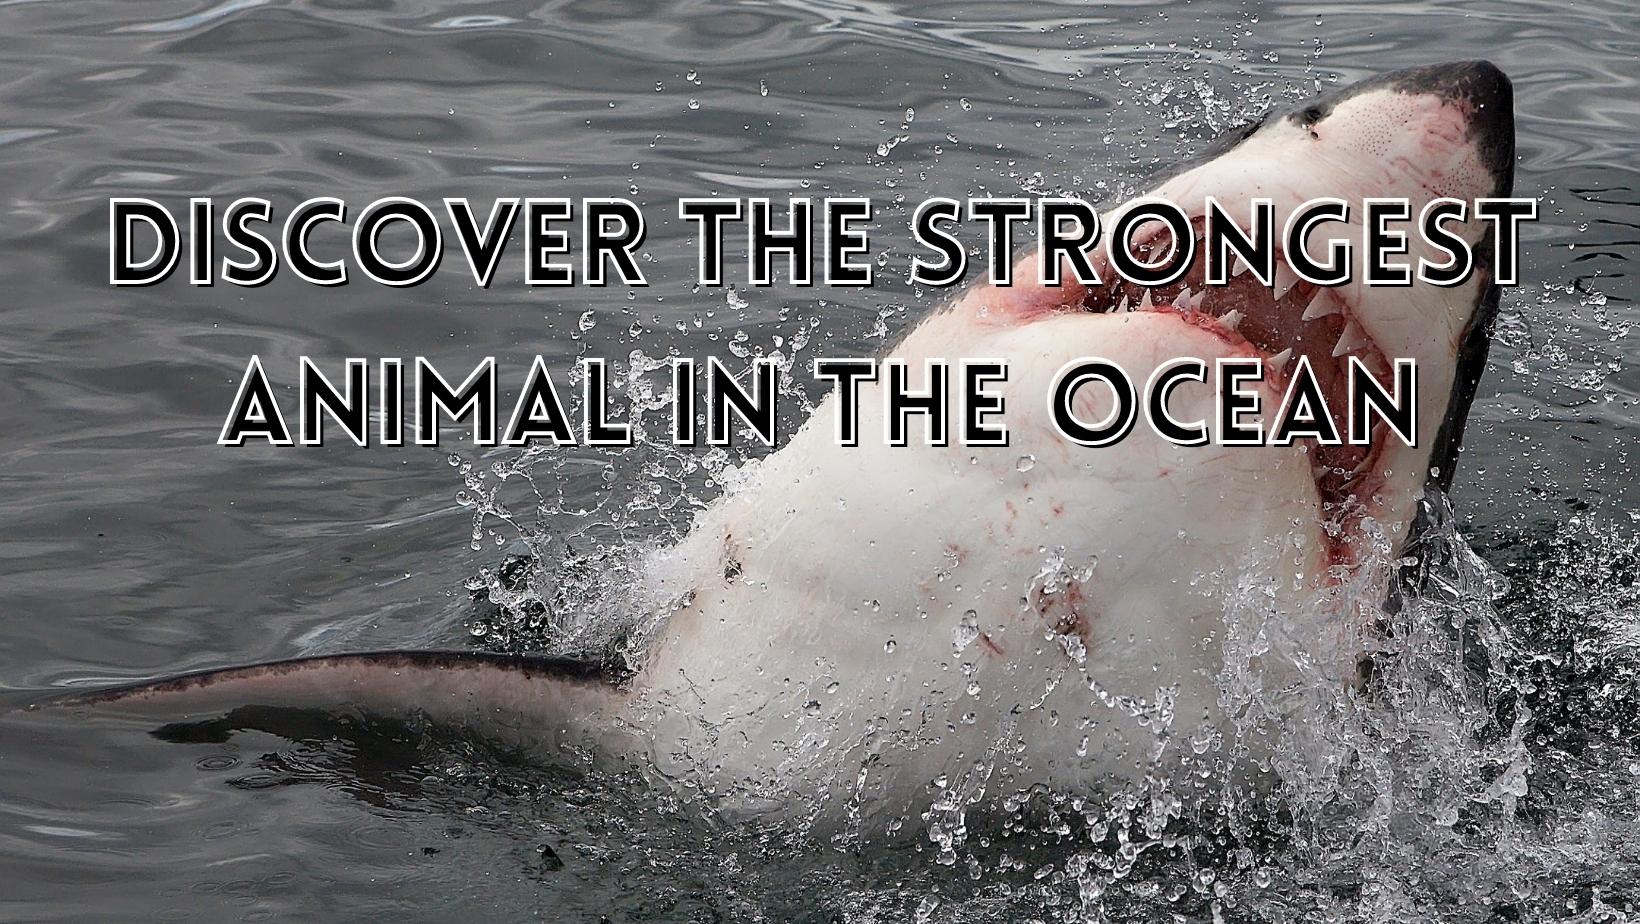 Strongest animal in the ocean